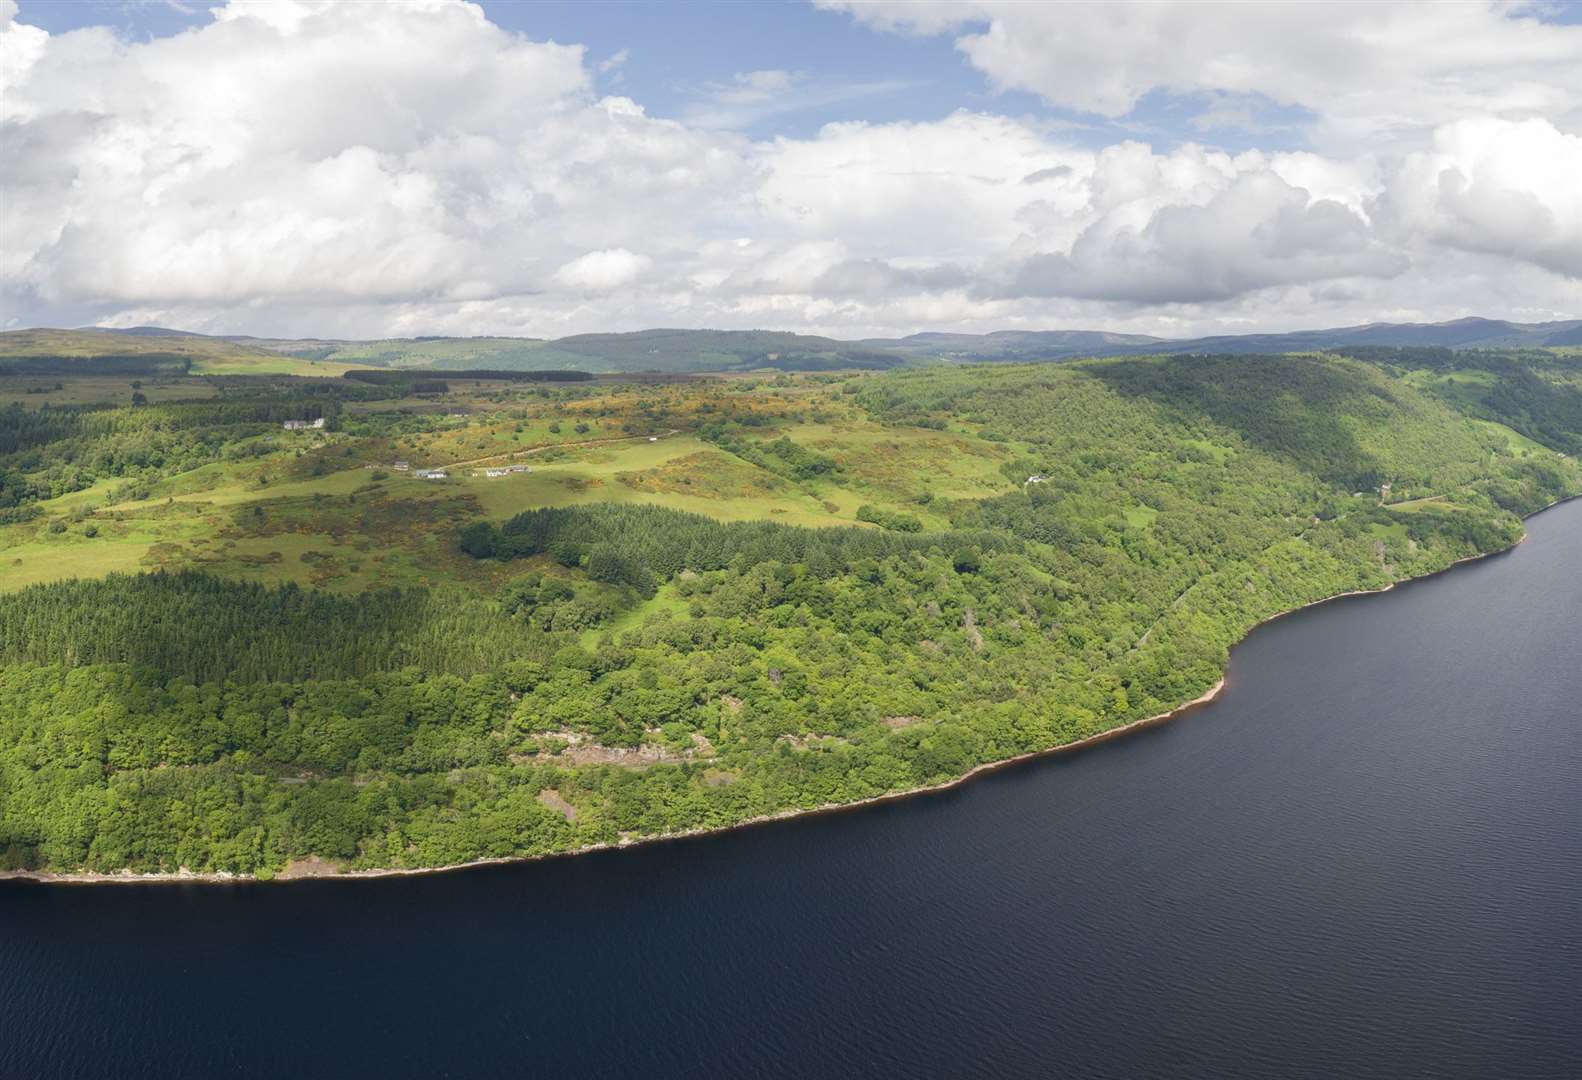 Work is planned to reverse Bunloit Estate near Loch Ness from a net carbon source into a net carbon sink.